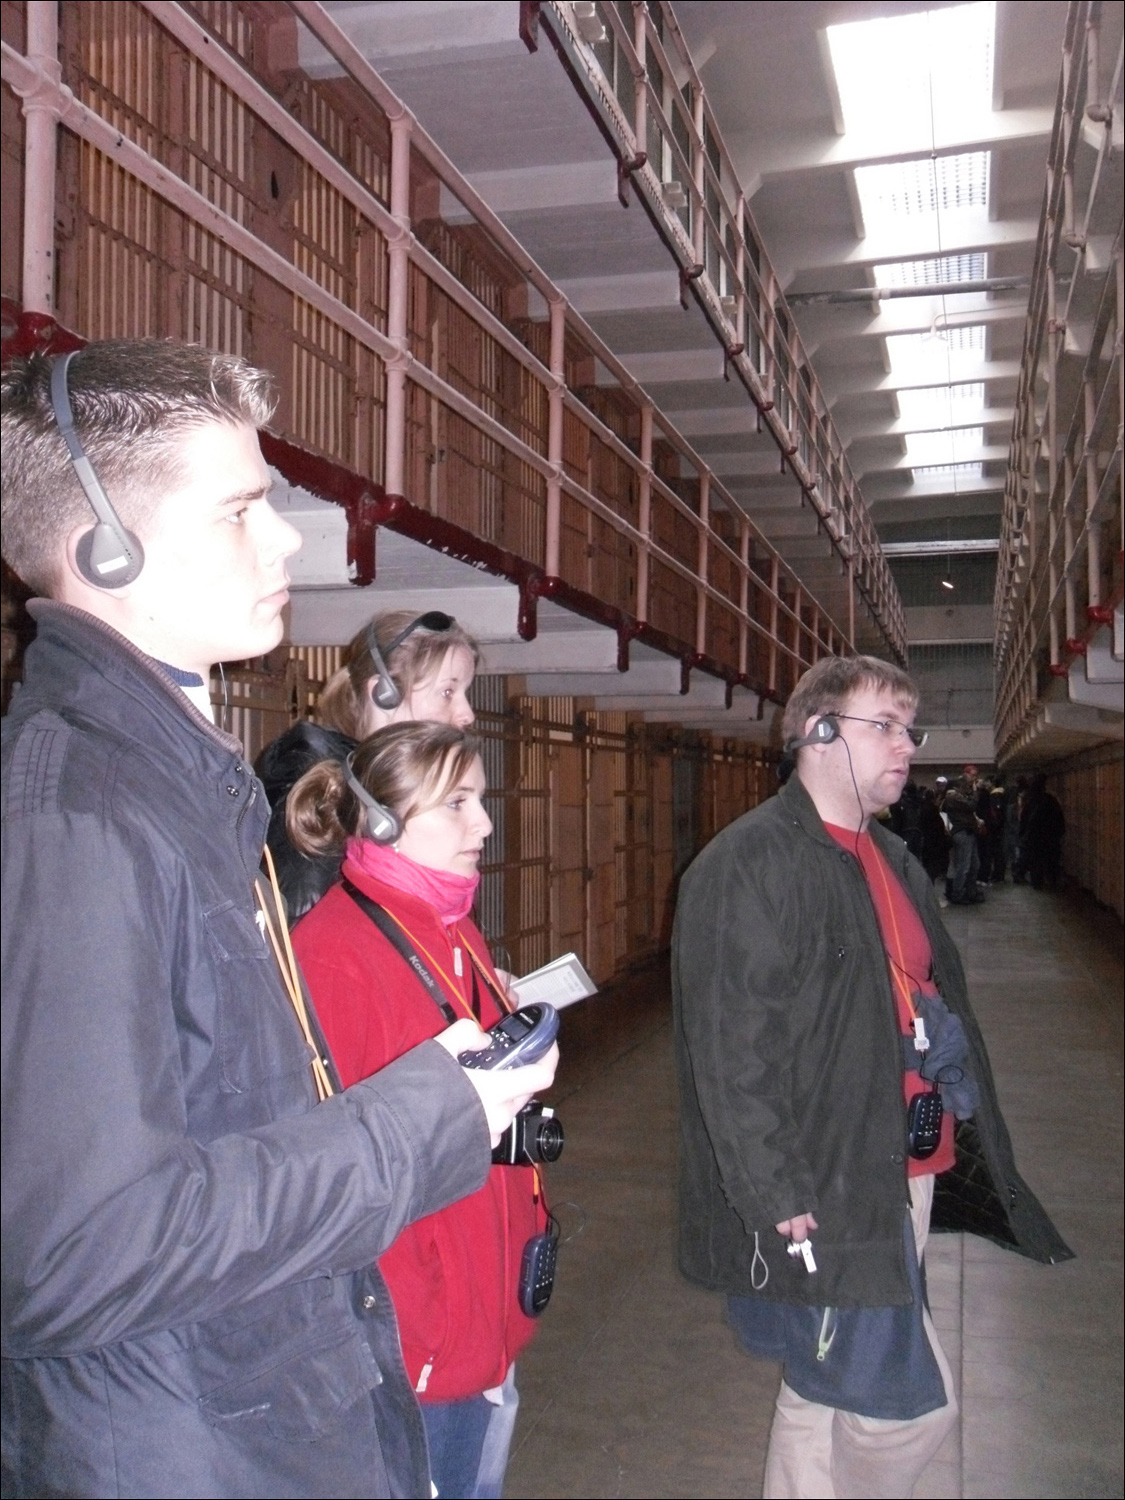 Inside the prison (L-R) Andre, Joseba, Judith, & Martijn